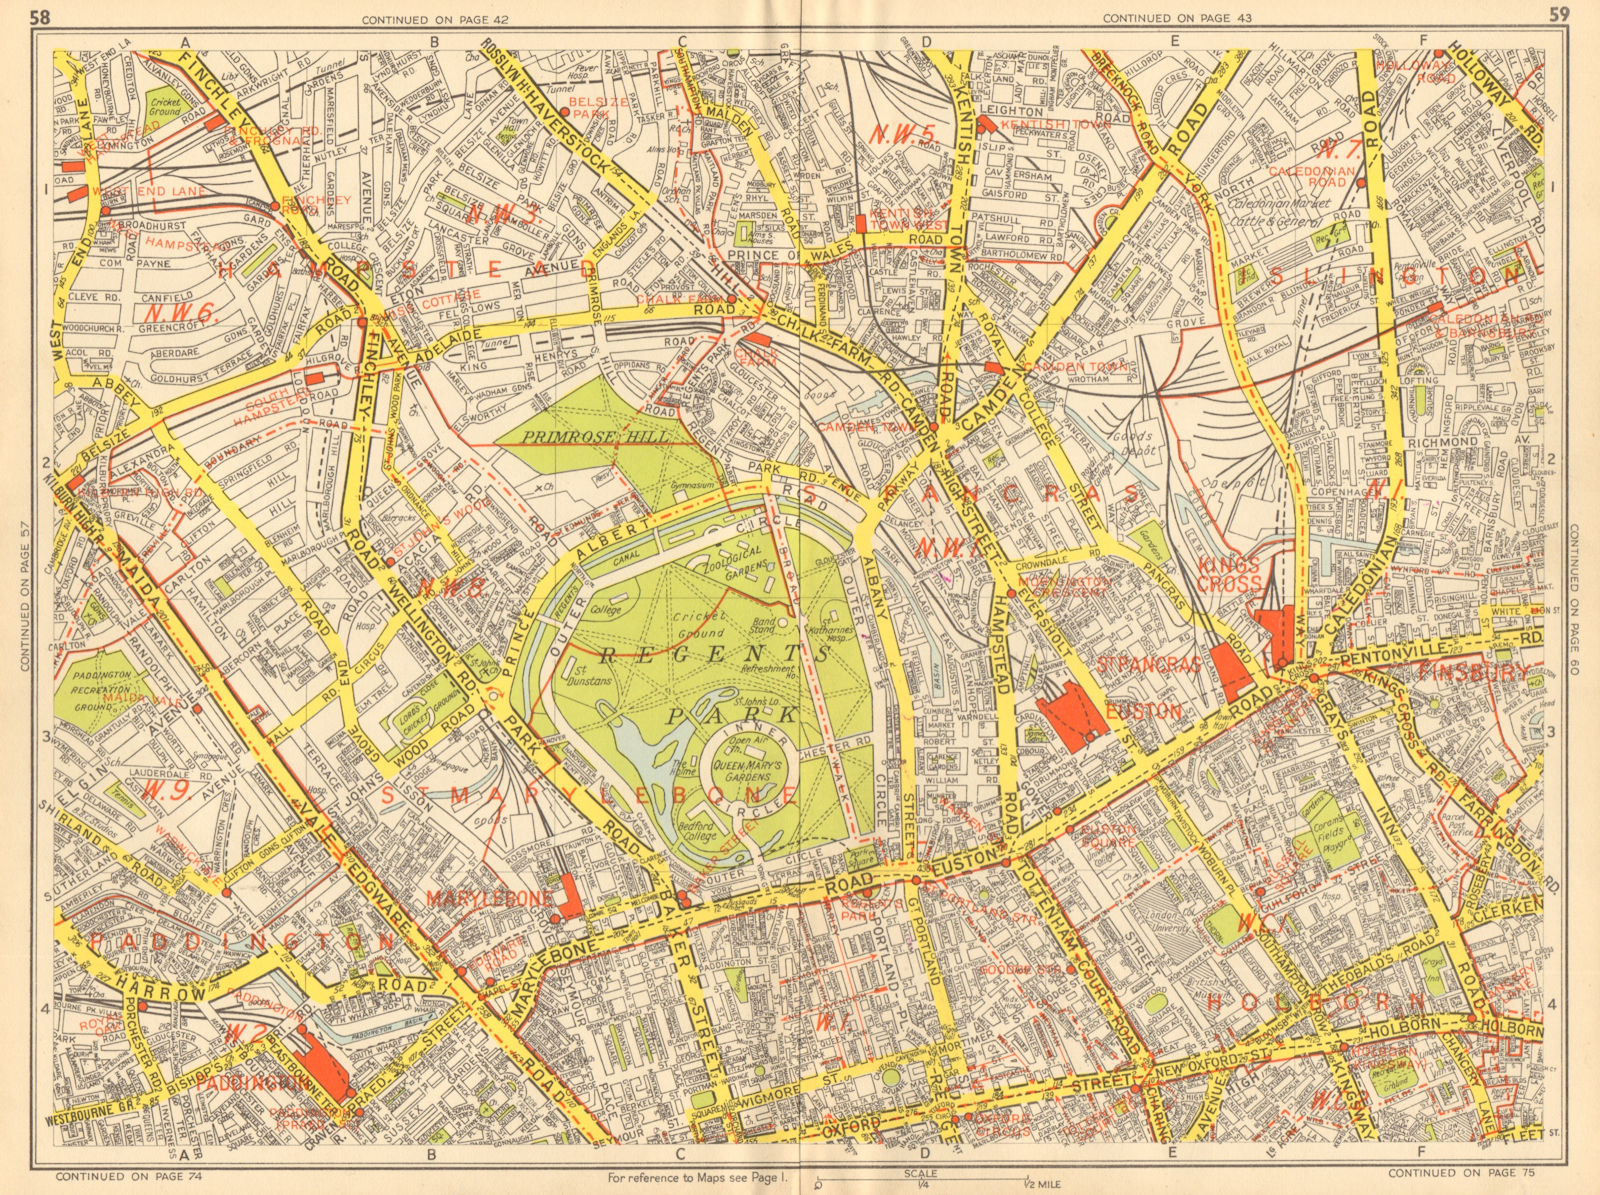 Marylebone Islington St John's Wood Bloomsbury Camden. GEOGRAPHERS' A-Z 1948 map